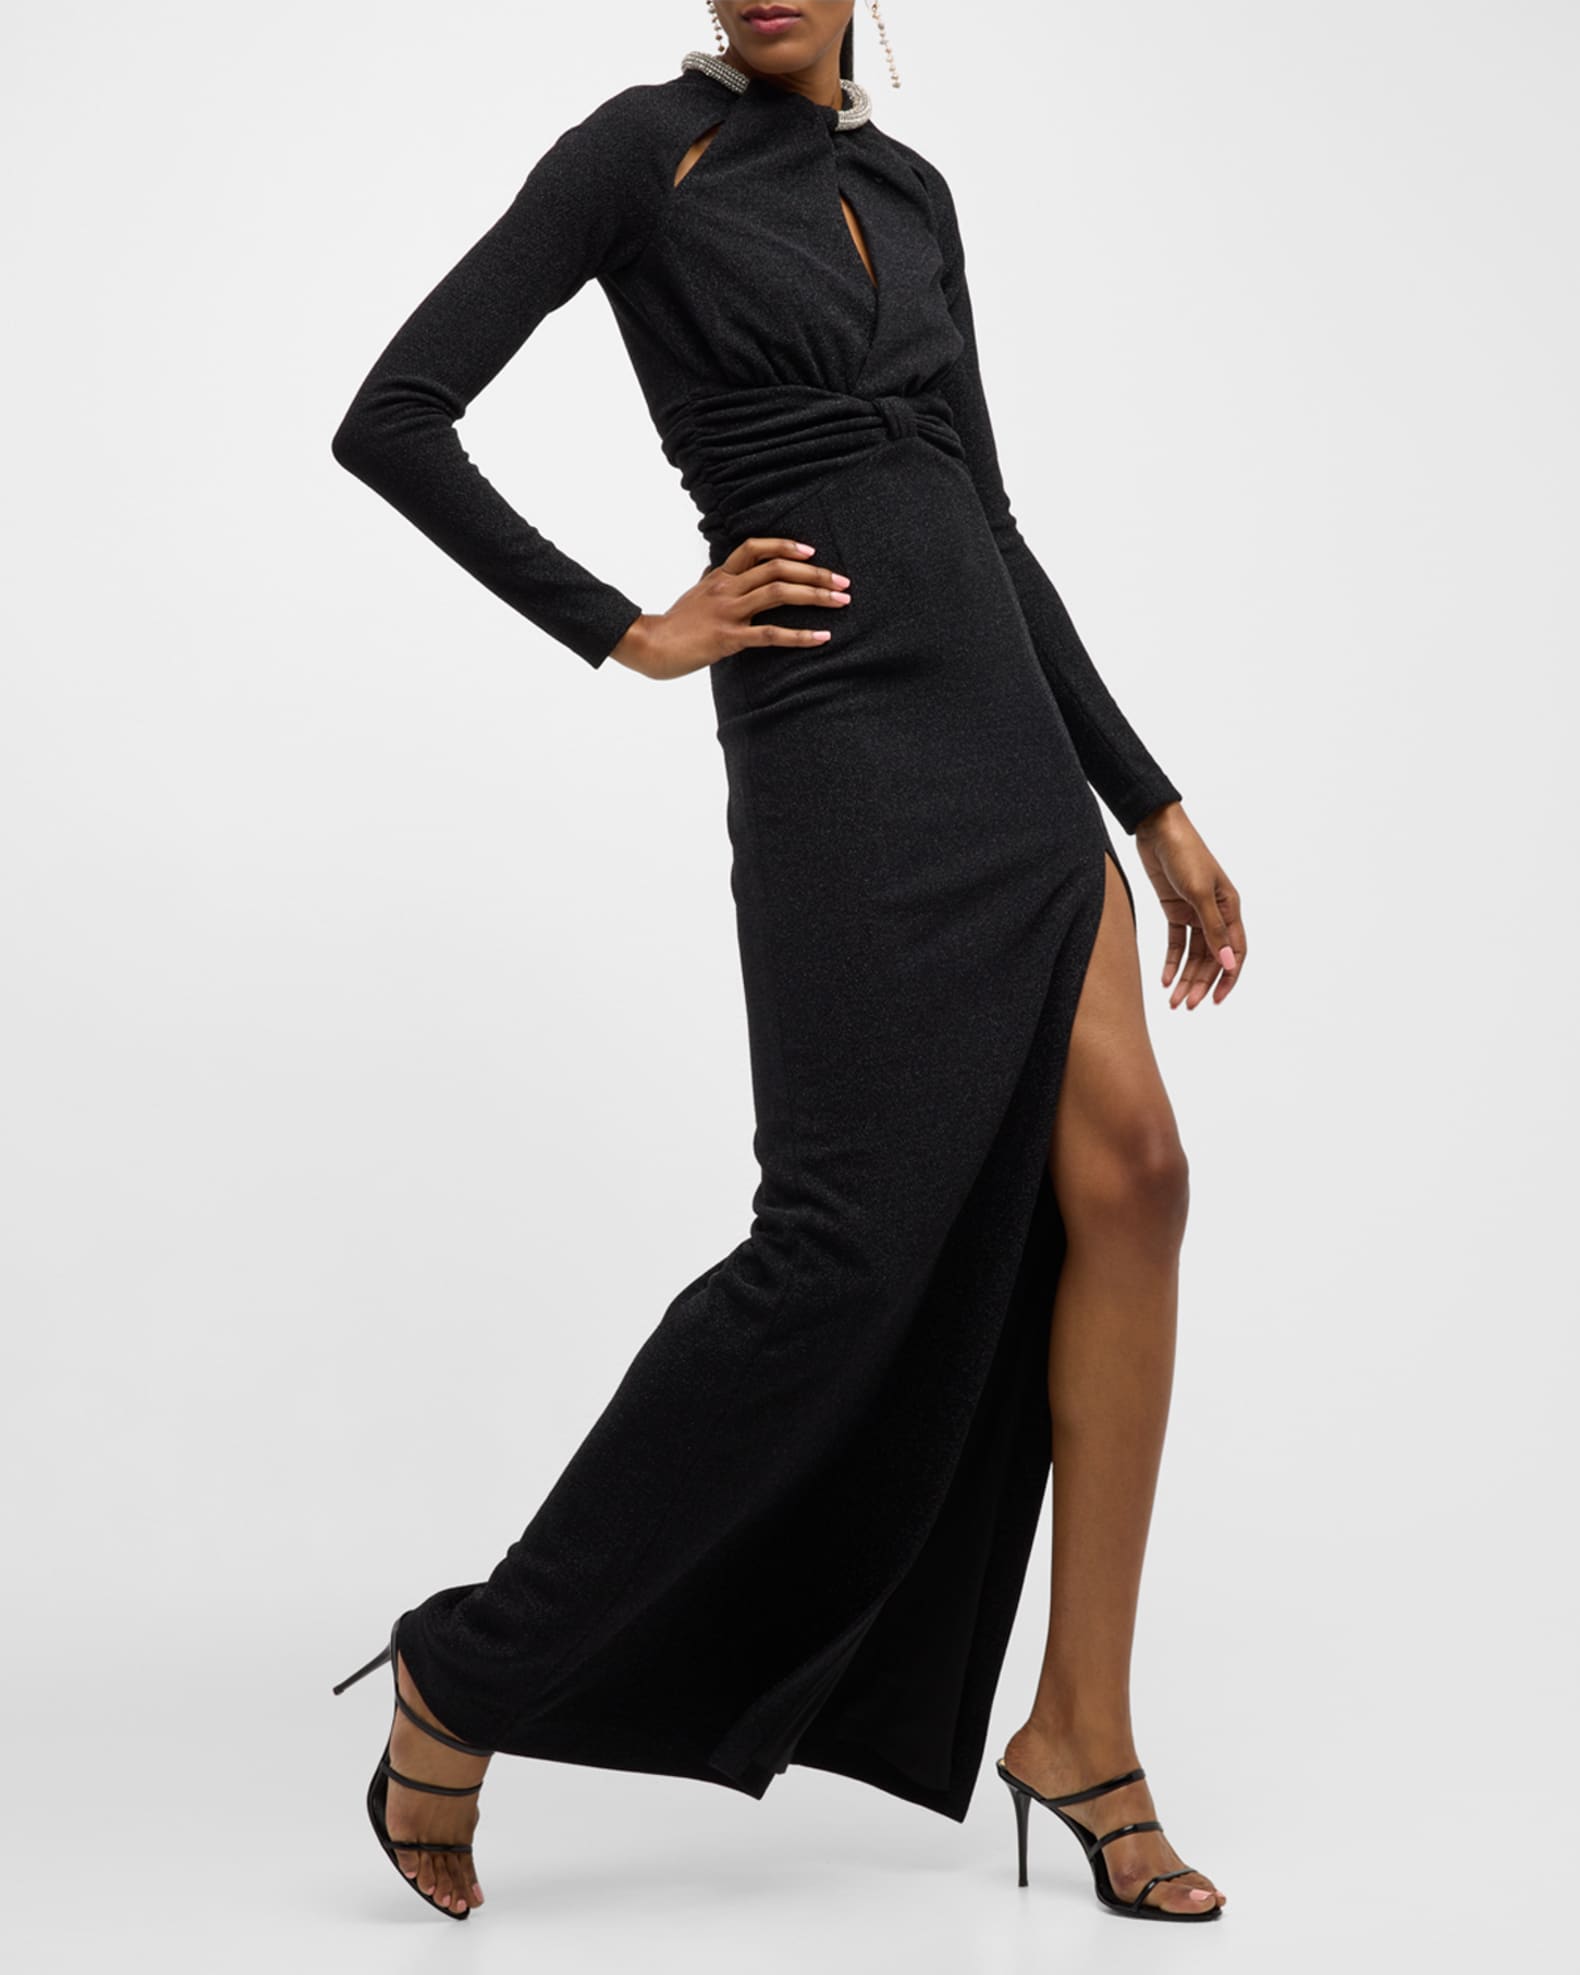 REBECCA VALLANCE Simone Cutout Rhinestone-Embellished Gown | Neiman Marcus